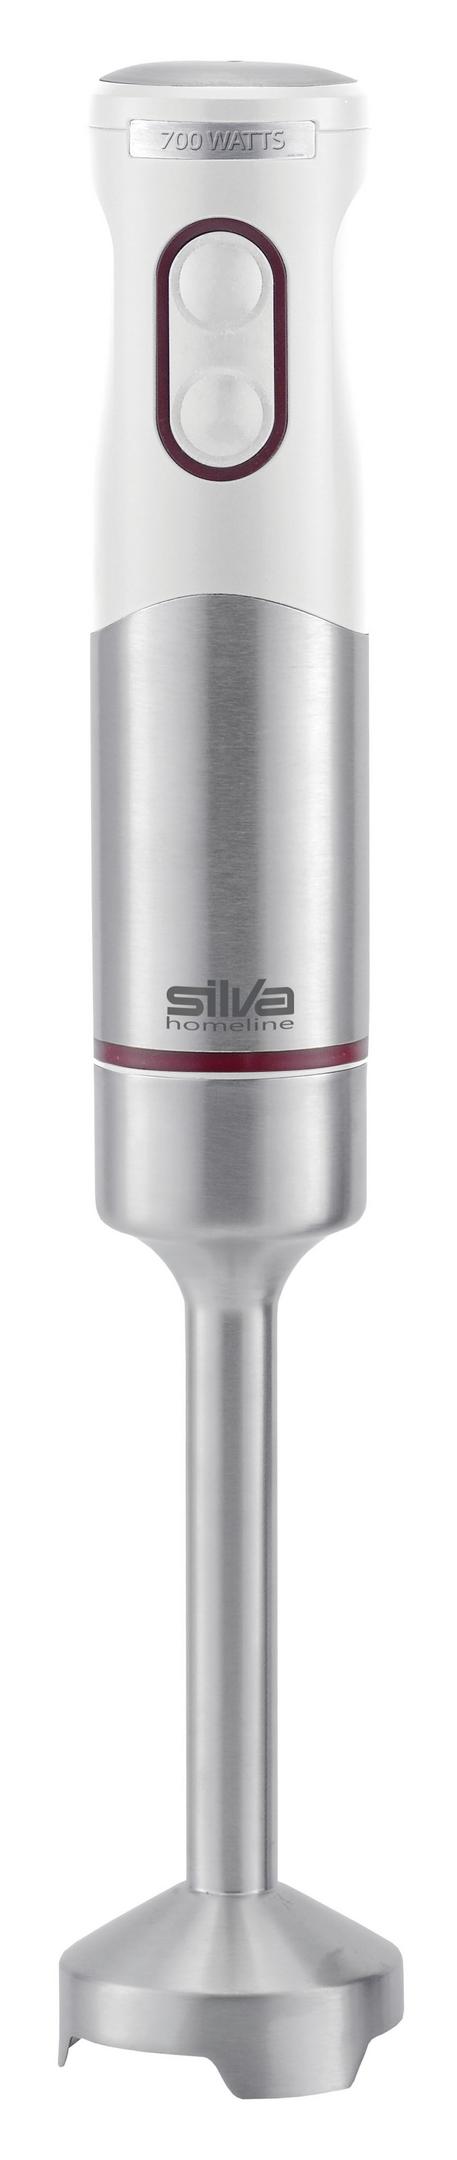 Stabmixer-Set Sms 6501 Weiß 700w mit Turbostufe - Weiß, Basics, Kunststoff/Metall (6,5/36,5/8cm) - Silva Homeline